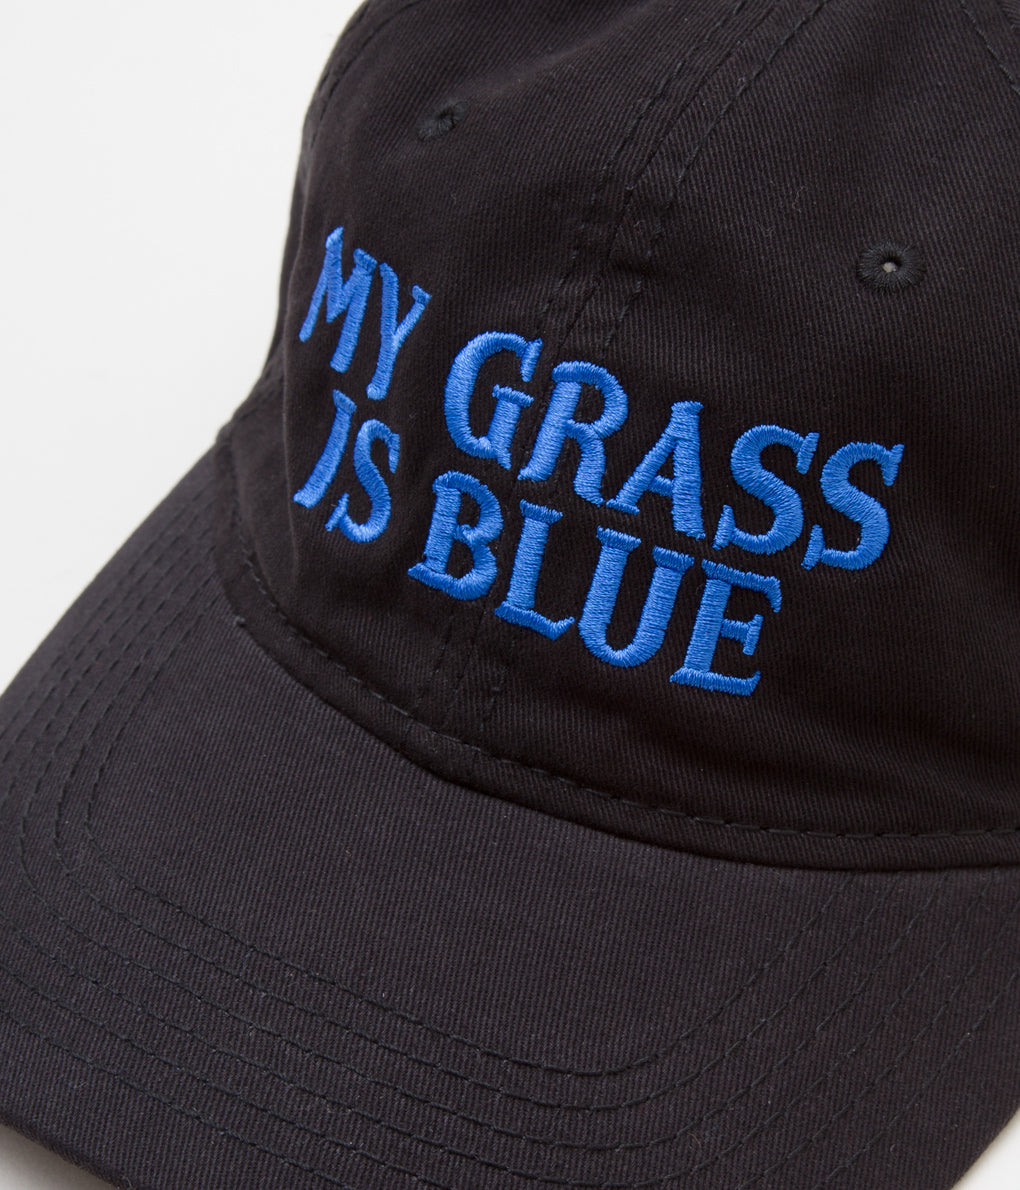 BLUESCENTRIC "MY GRASS IS BLUE CAP"(BLACK)